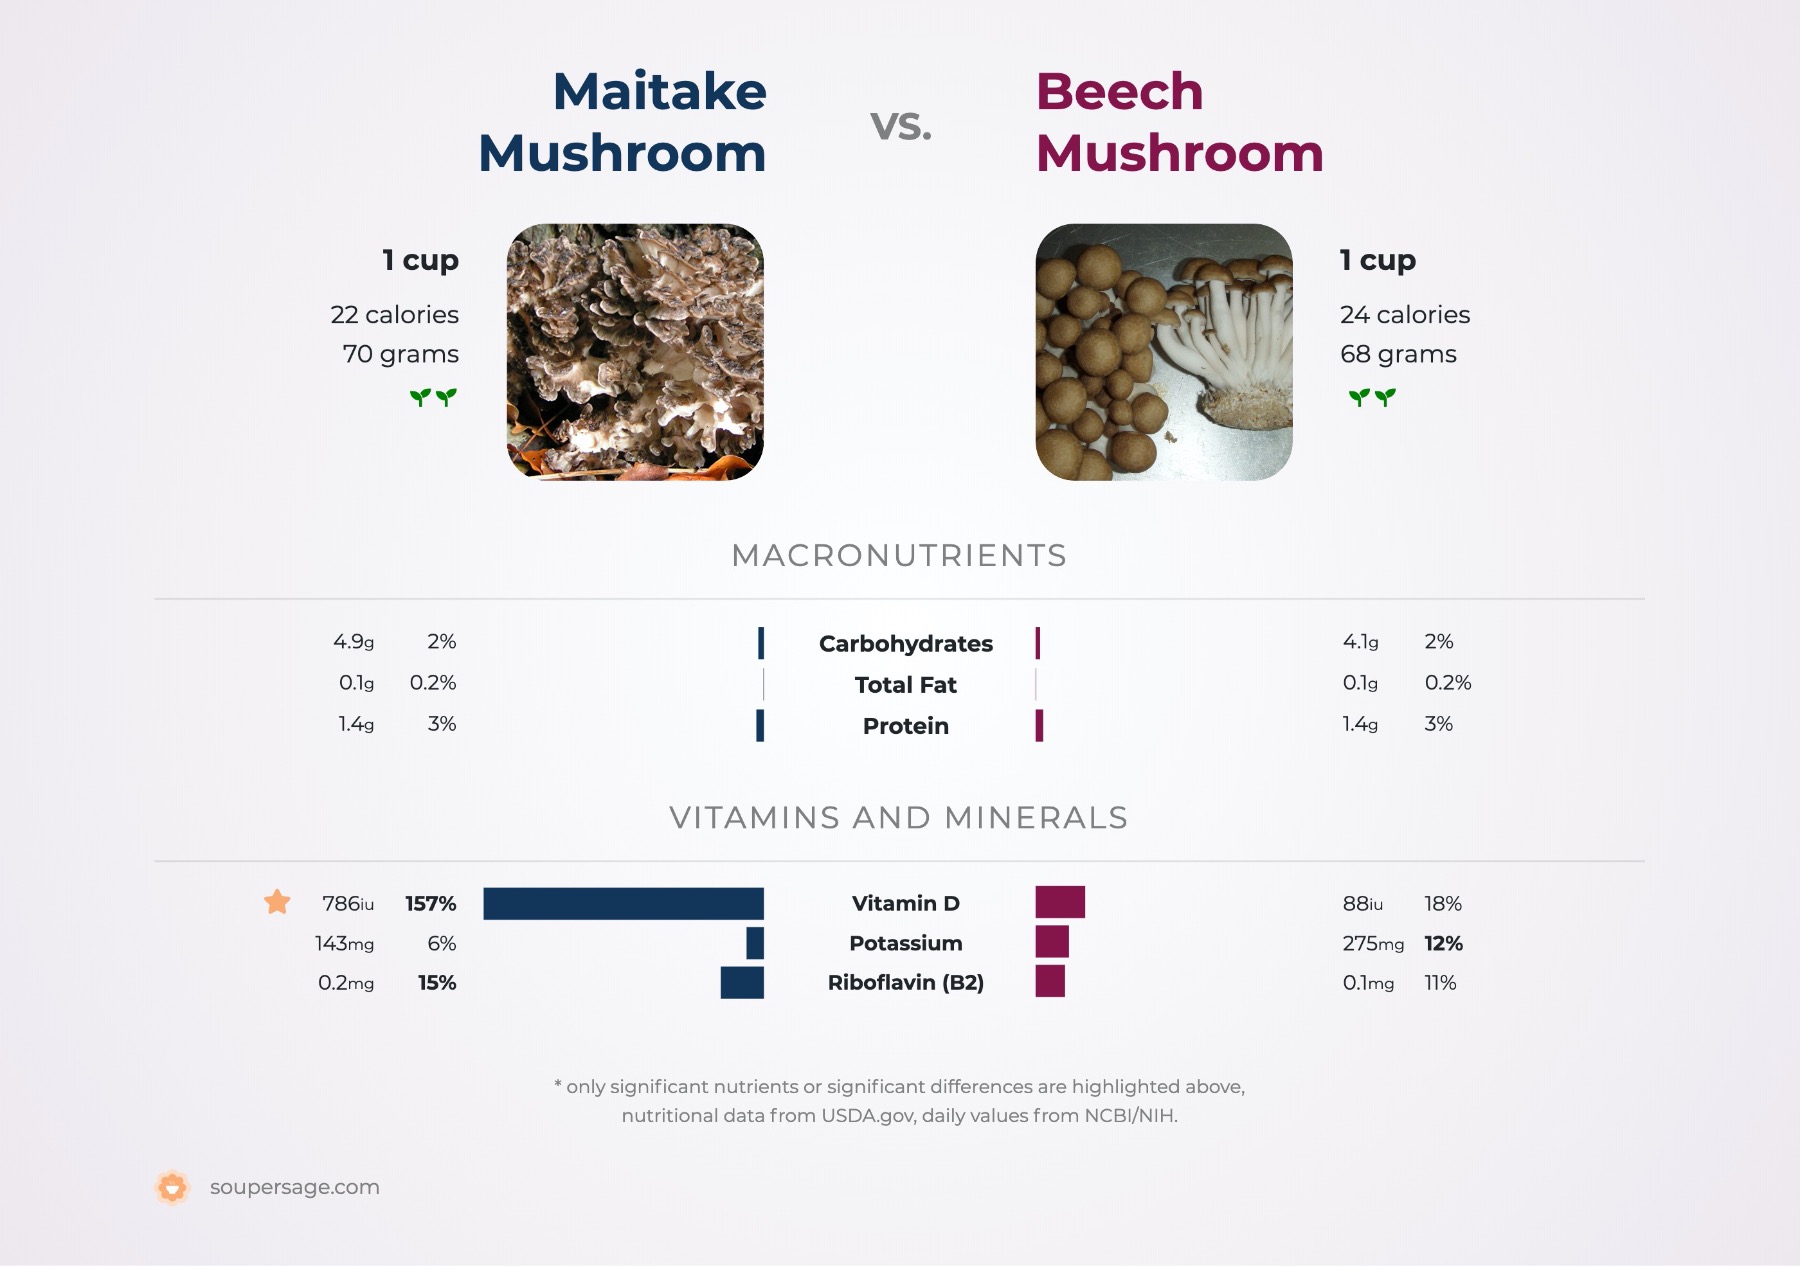 nutrition comparison of beech mushroom vs. maitake mushroom